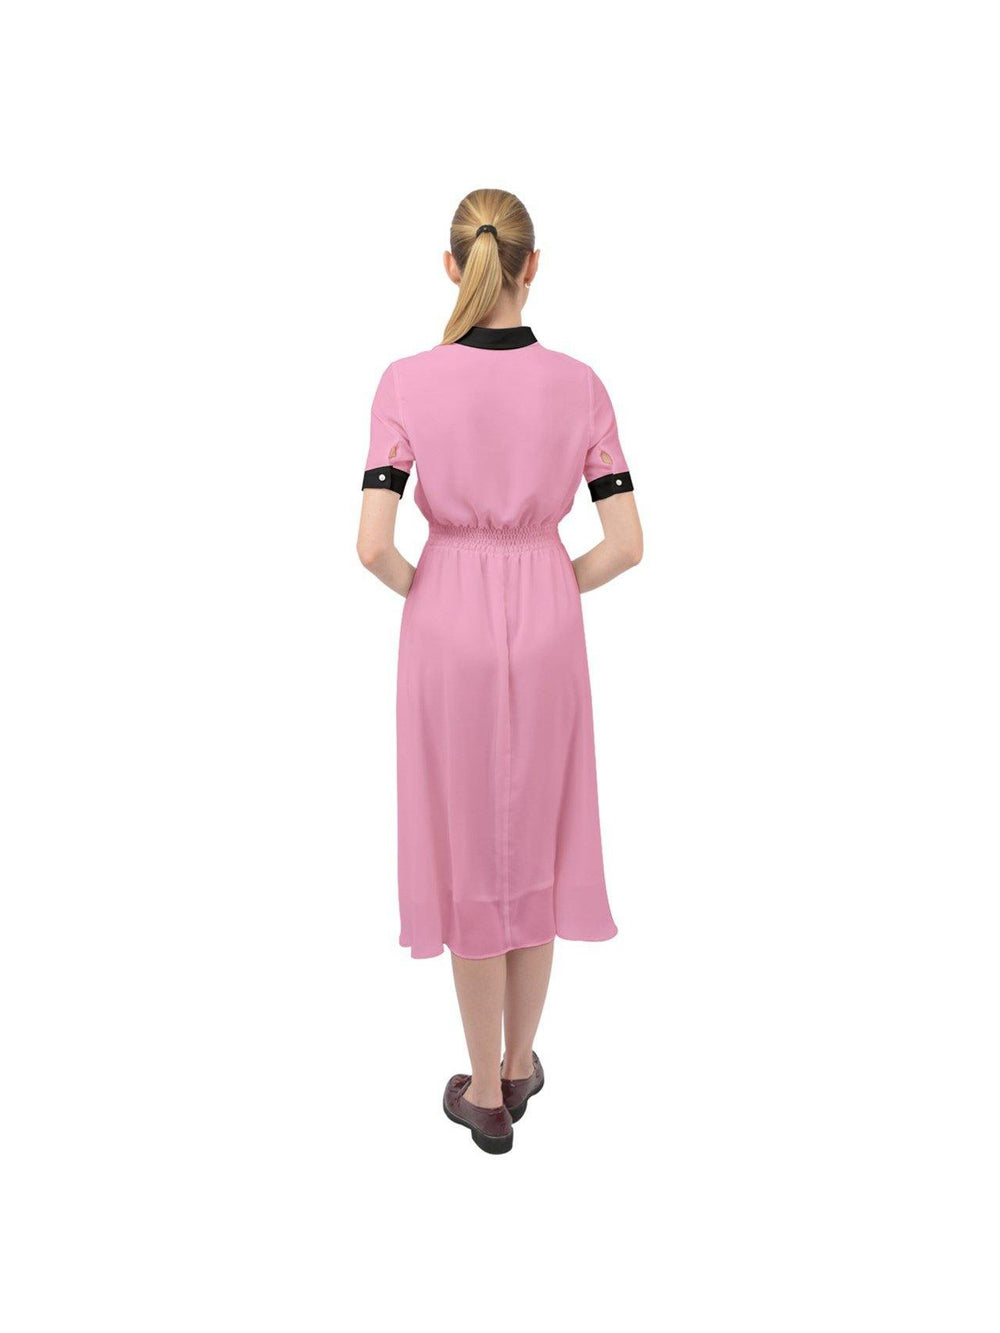 AVA 1940s Vintage Keyhole Neckline Dress Pink/Black